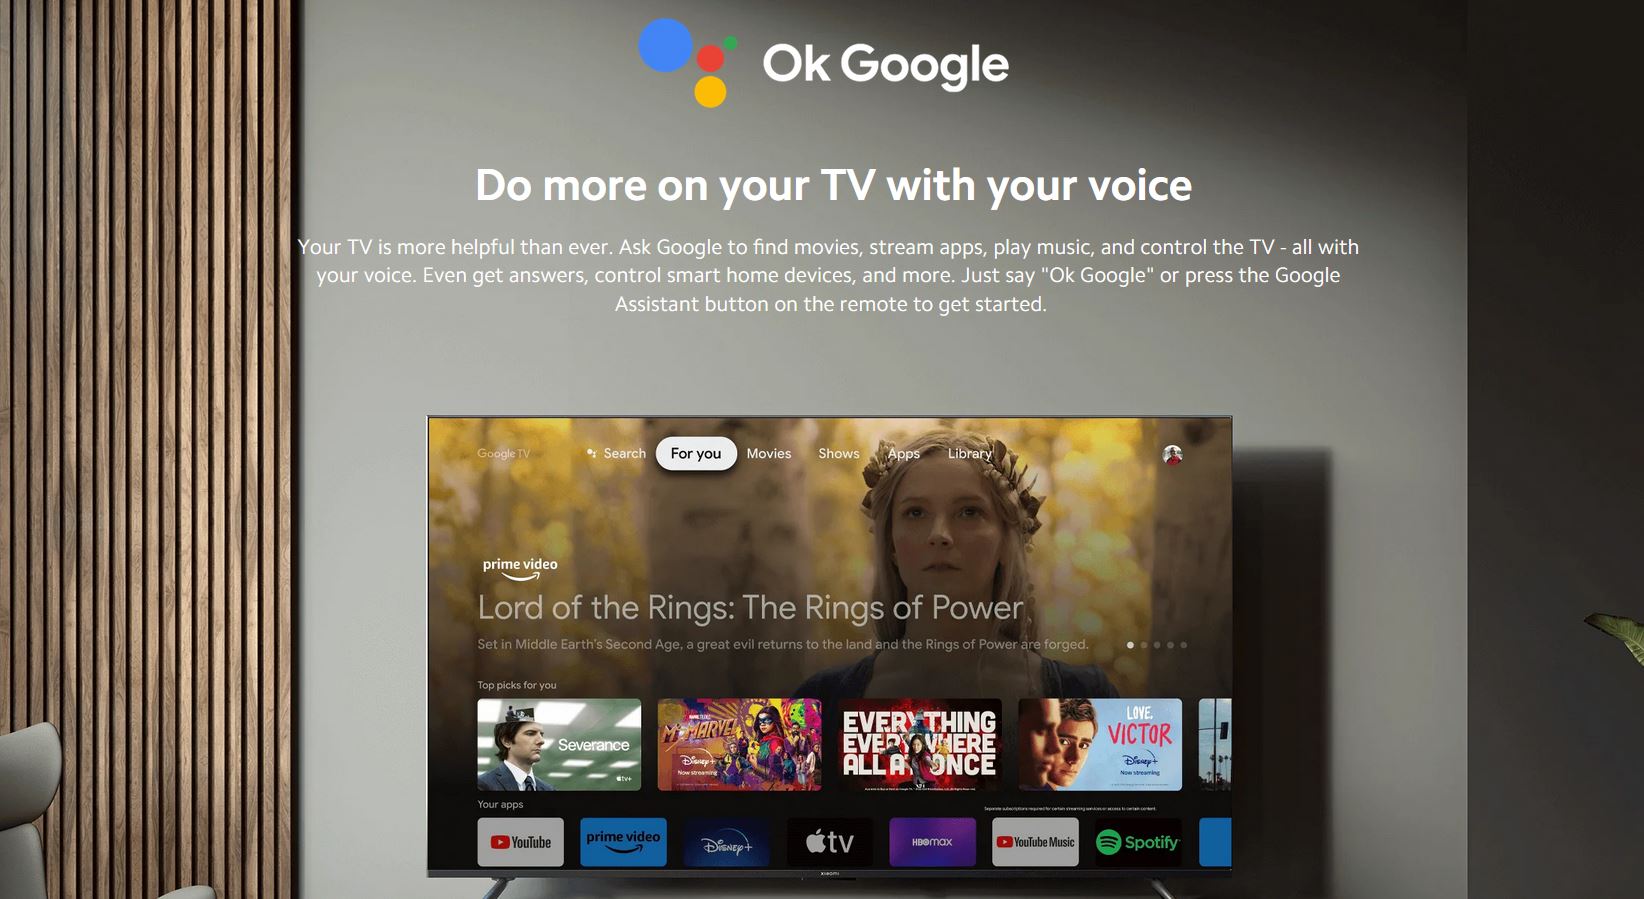 Google TV Chromecast 2nd Gen Vs Mi Box S 2nd Gen: Which To Choose